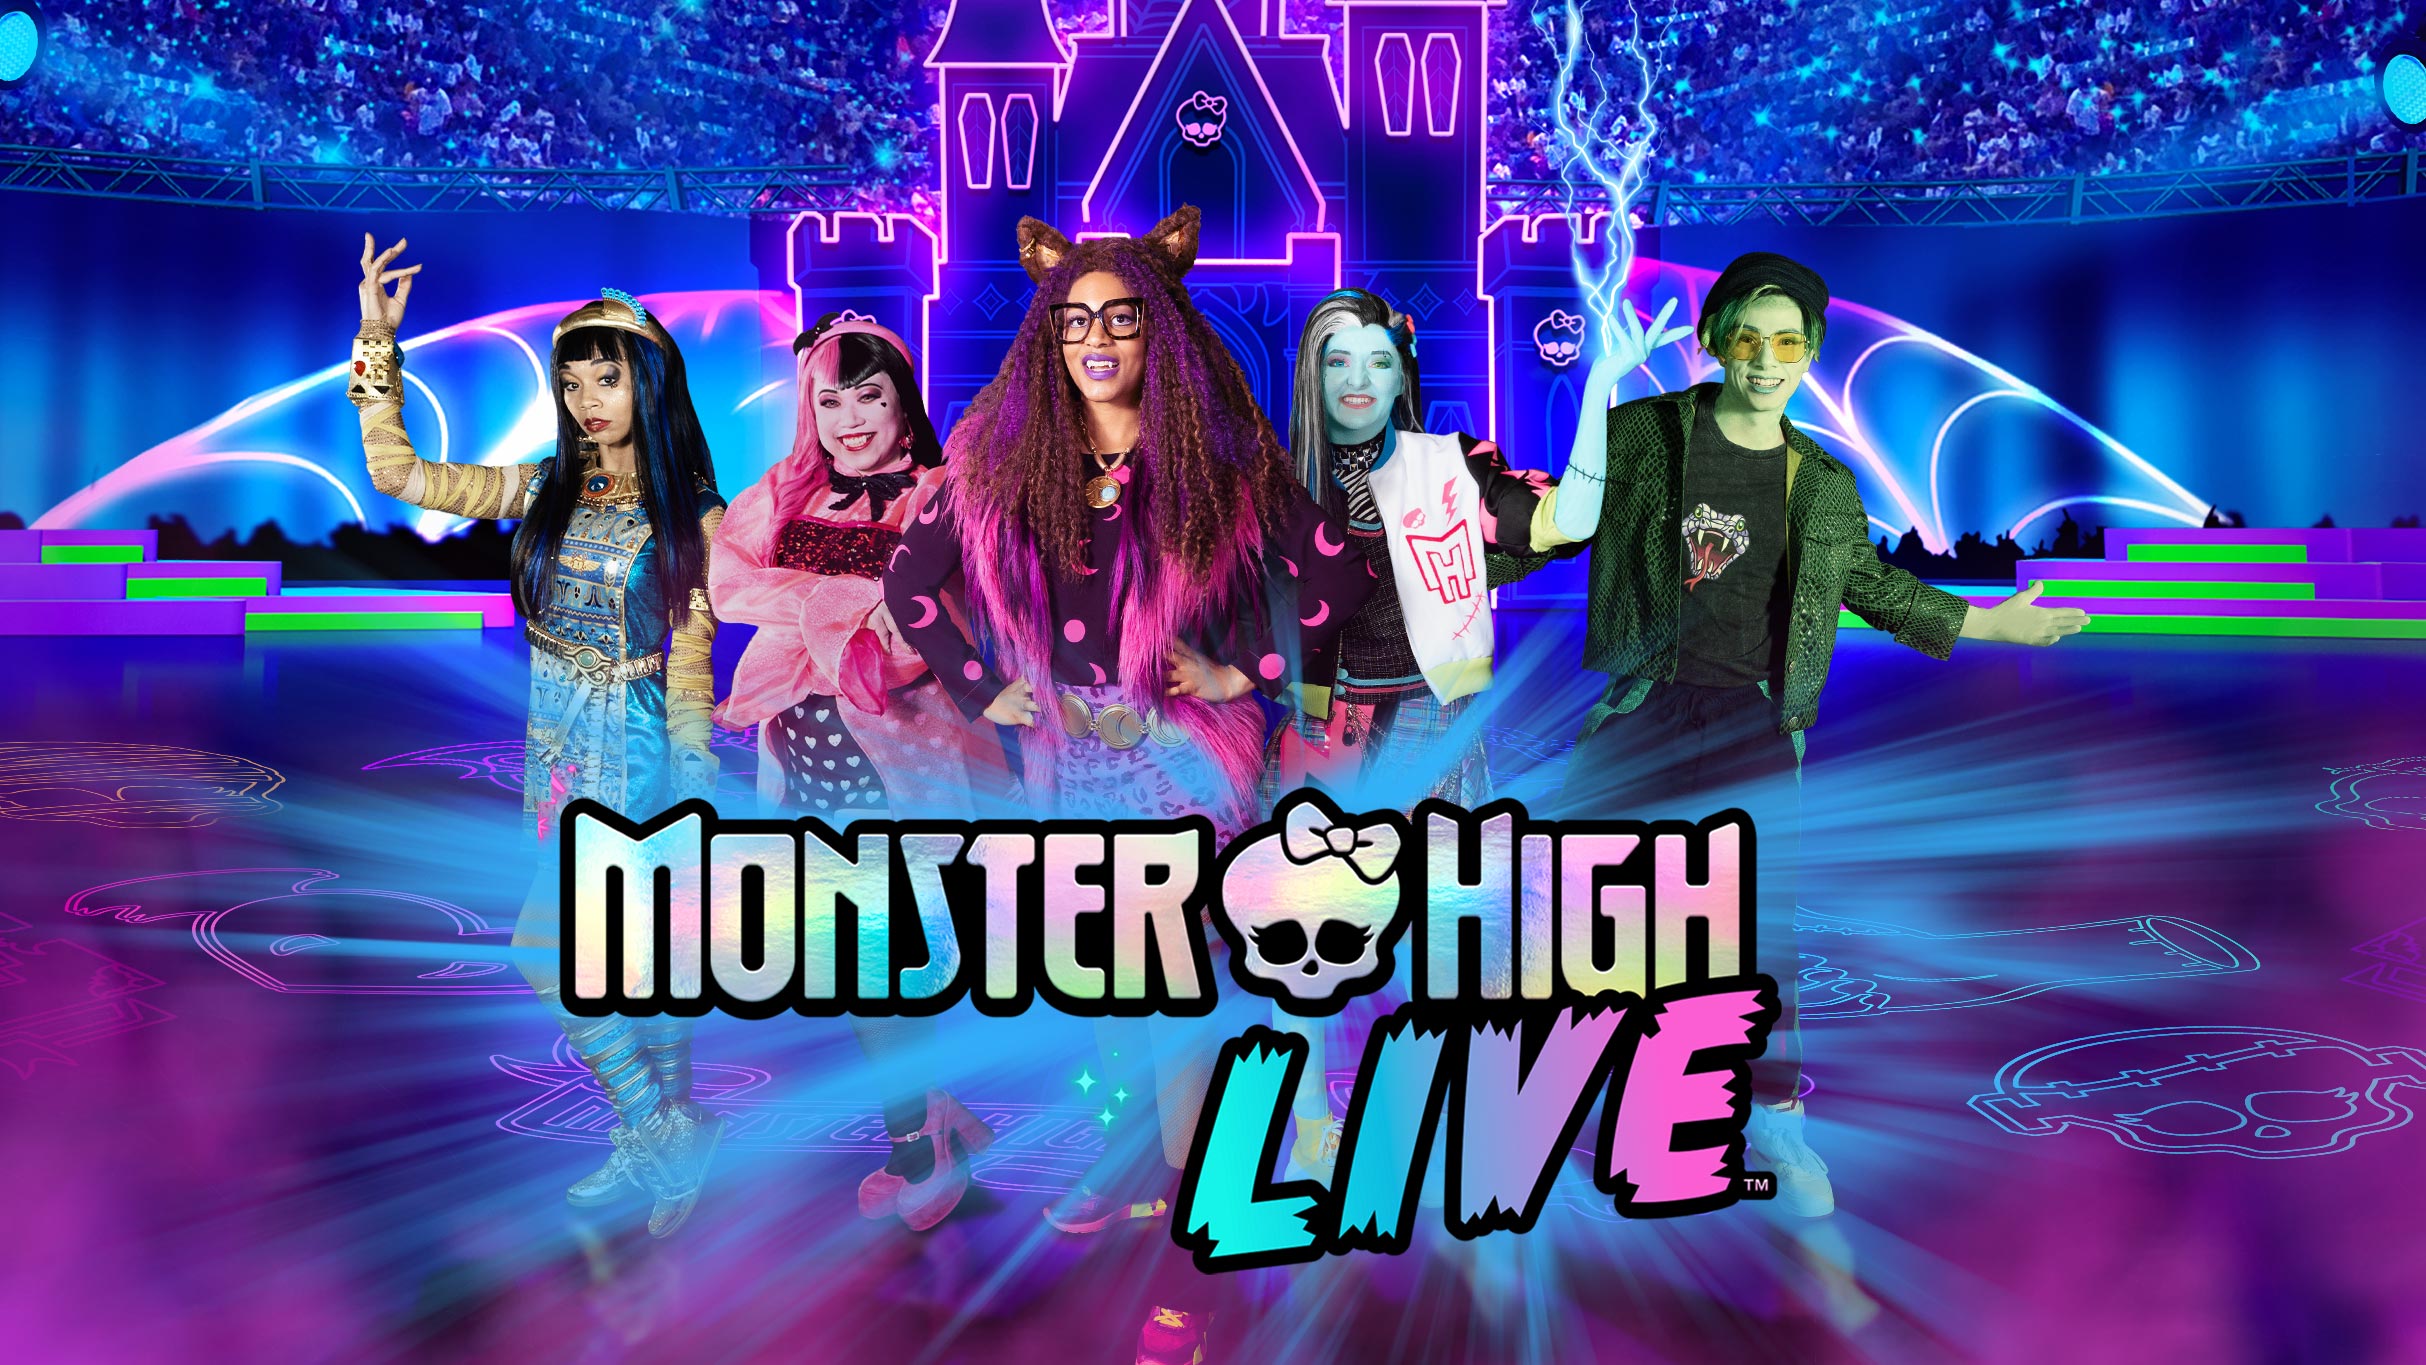 Monster High Live in Hershey promo photo for Mattel presale offer code